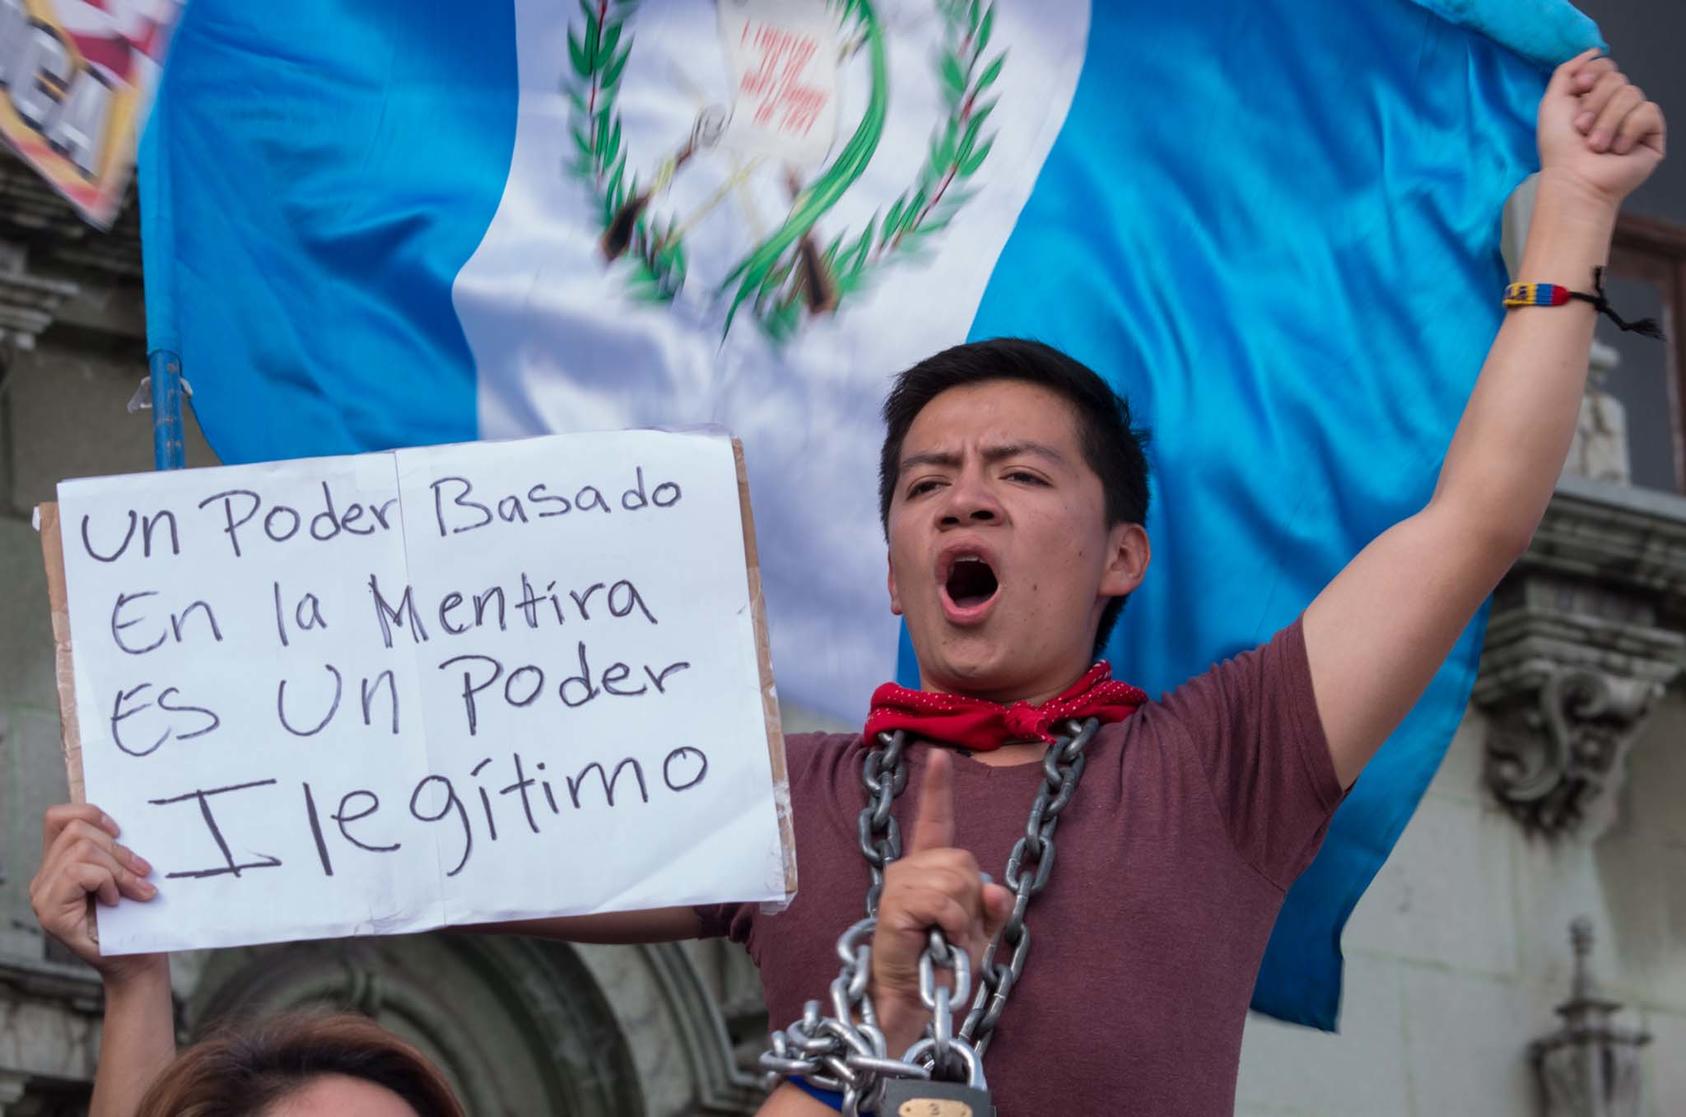 RenunciaYa protesters in Guatemala City, Guatemala. May 30, 2015. (Eric Walter/Wikimedia Commons)